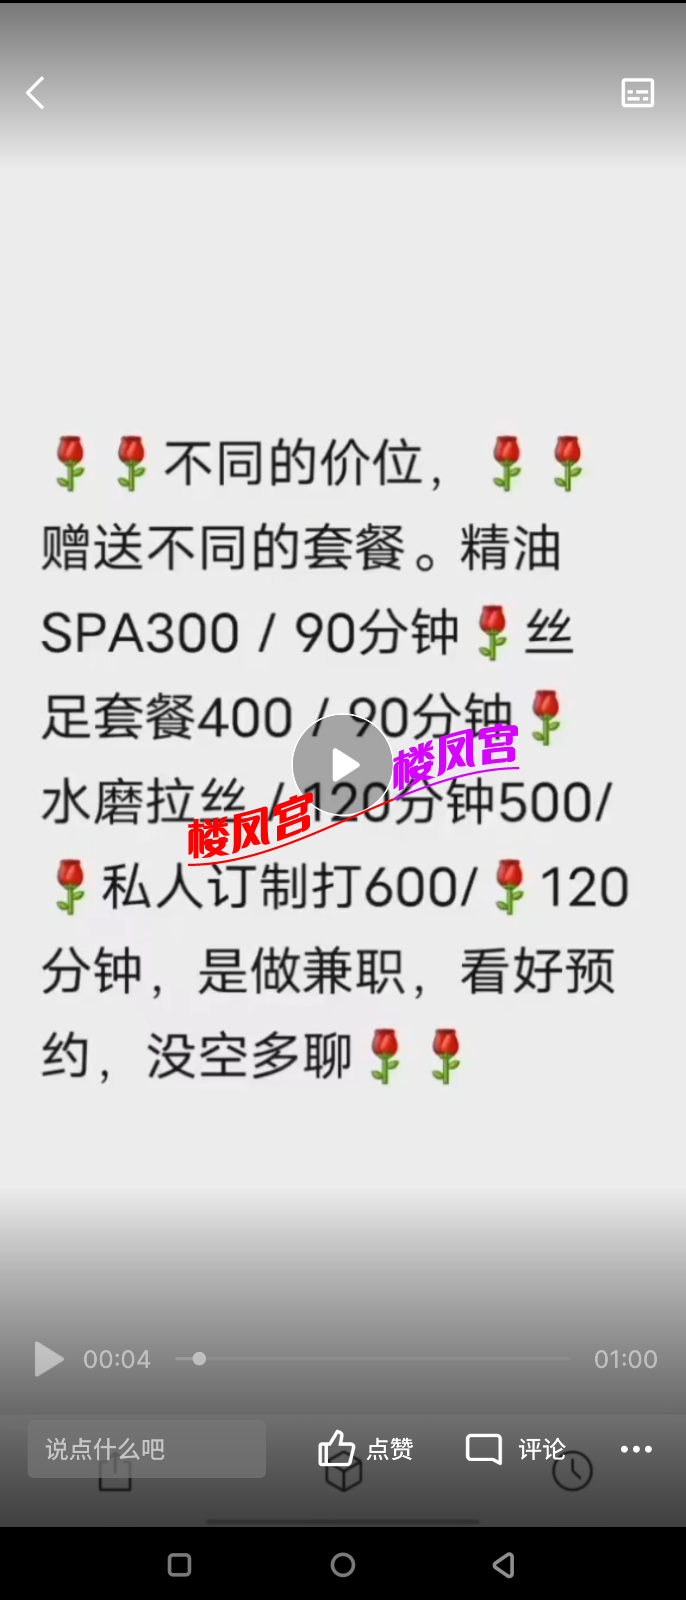 S40606-10493498_com.tencent.mobileqq.png